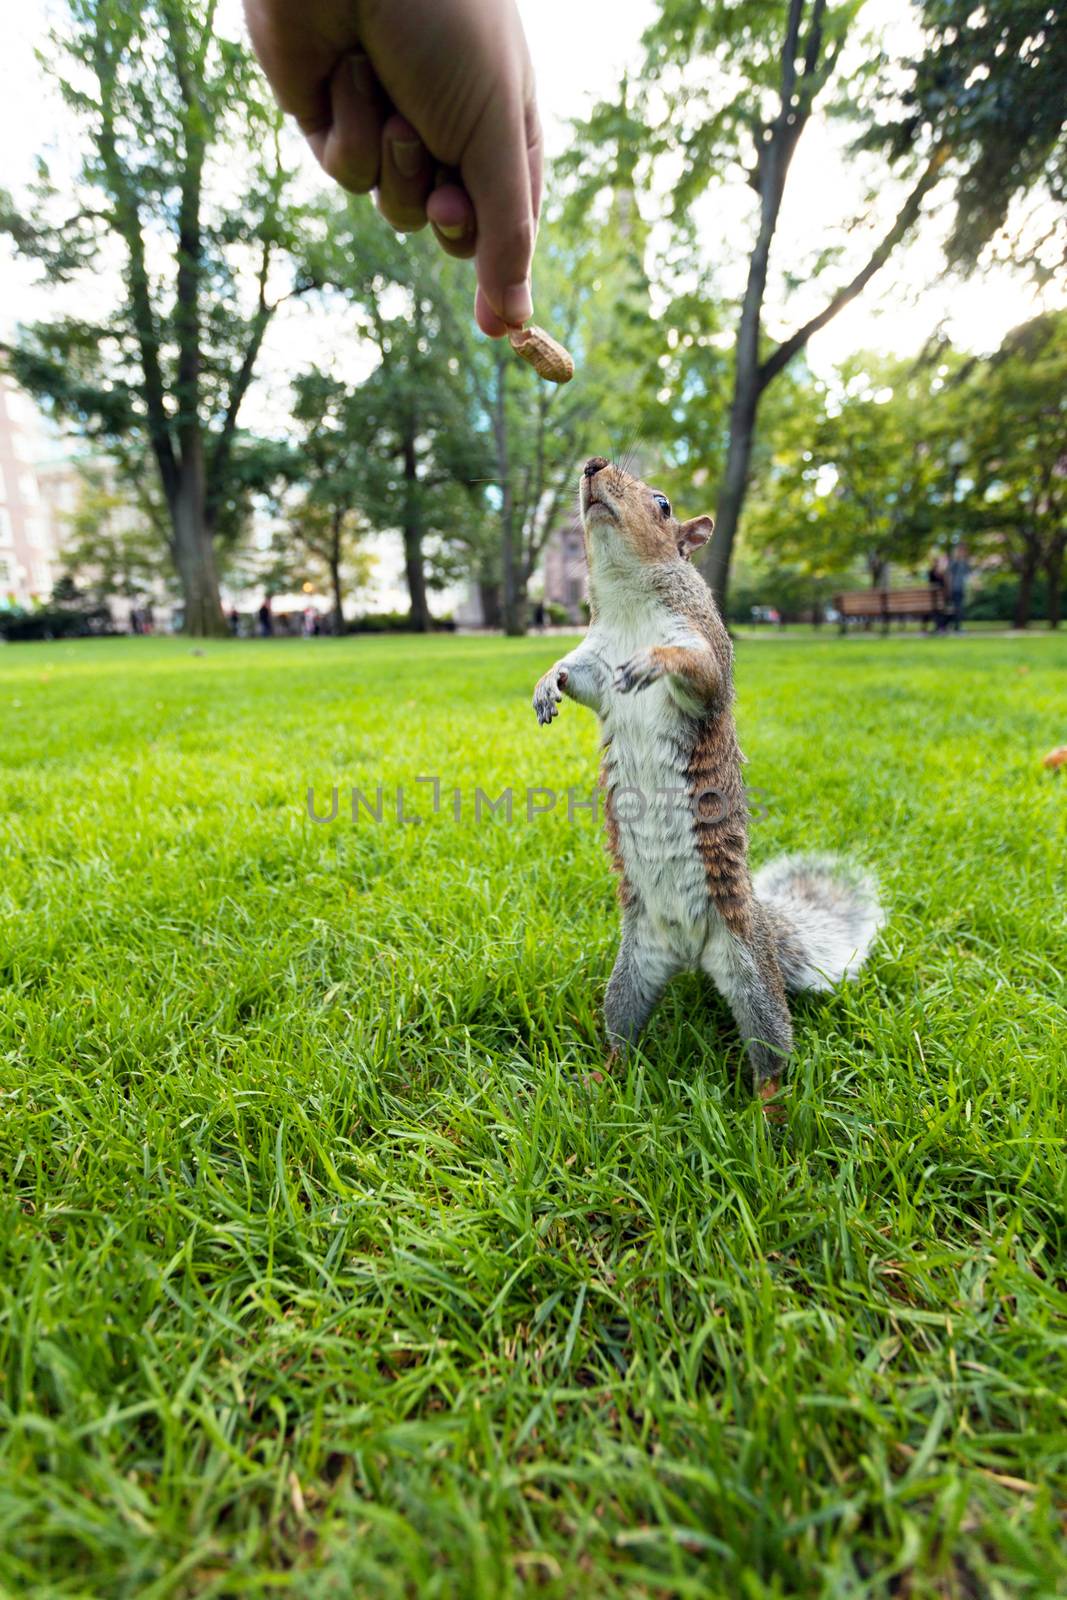 Feeding a wild squirrel a peanut in a public park located in Boston Massachusetts.